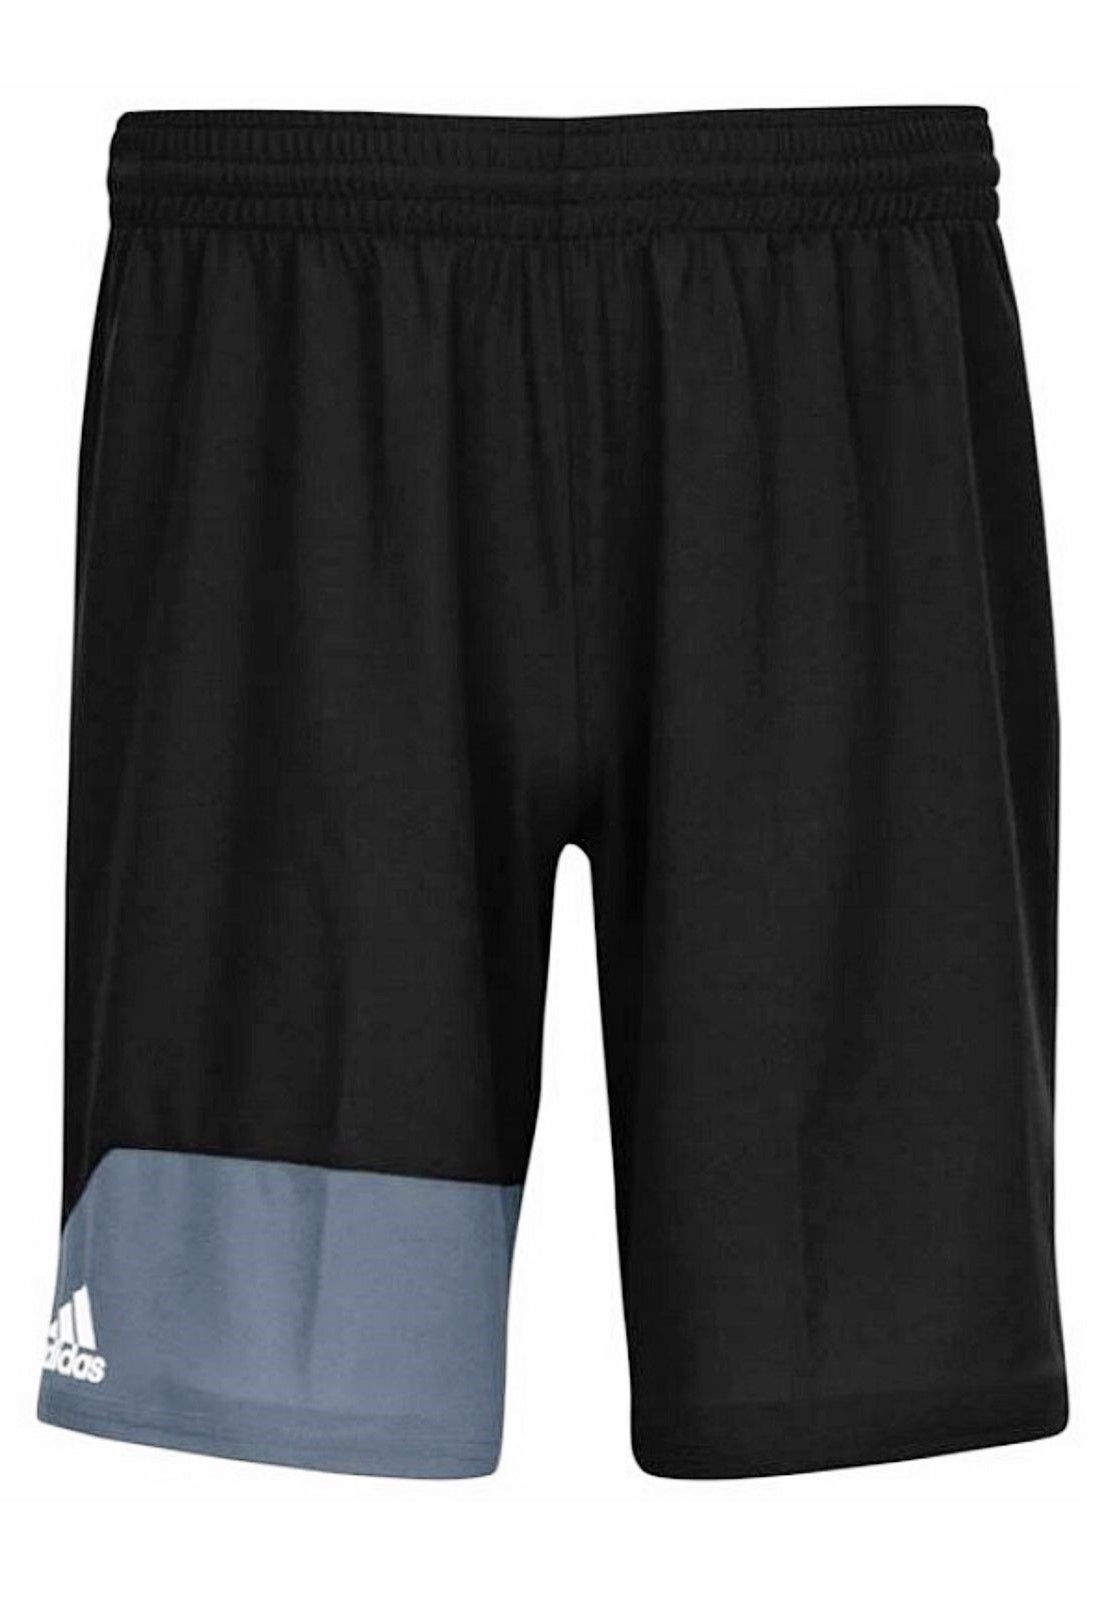 Adidas men’s Climalite spirit pack training shorts soccer shorts for $10